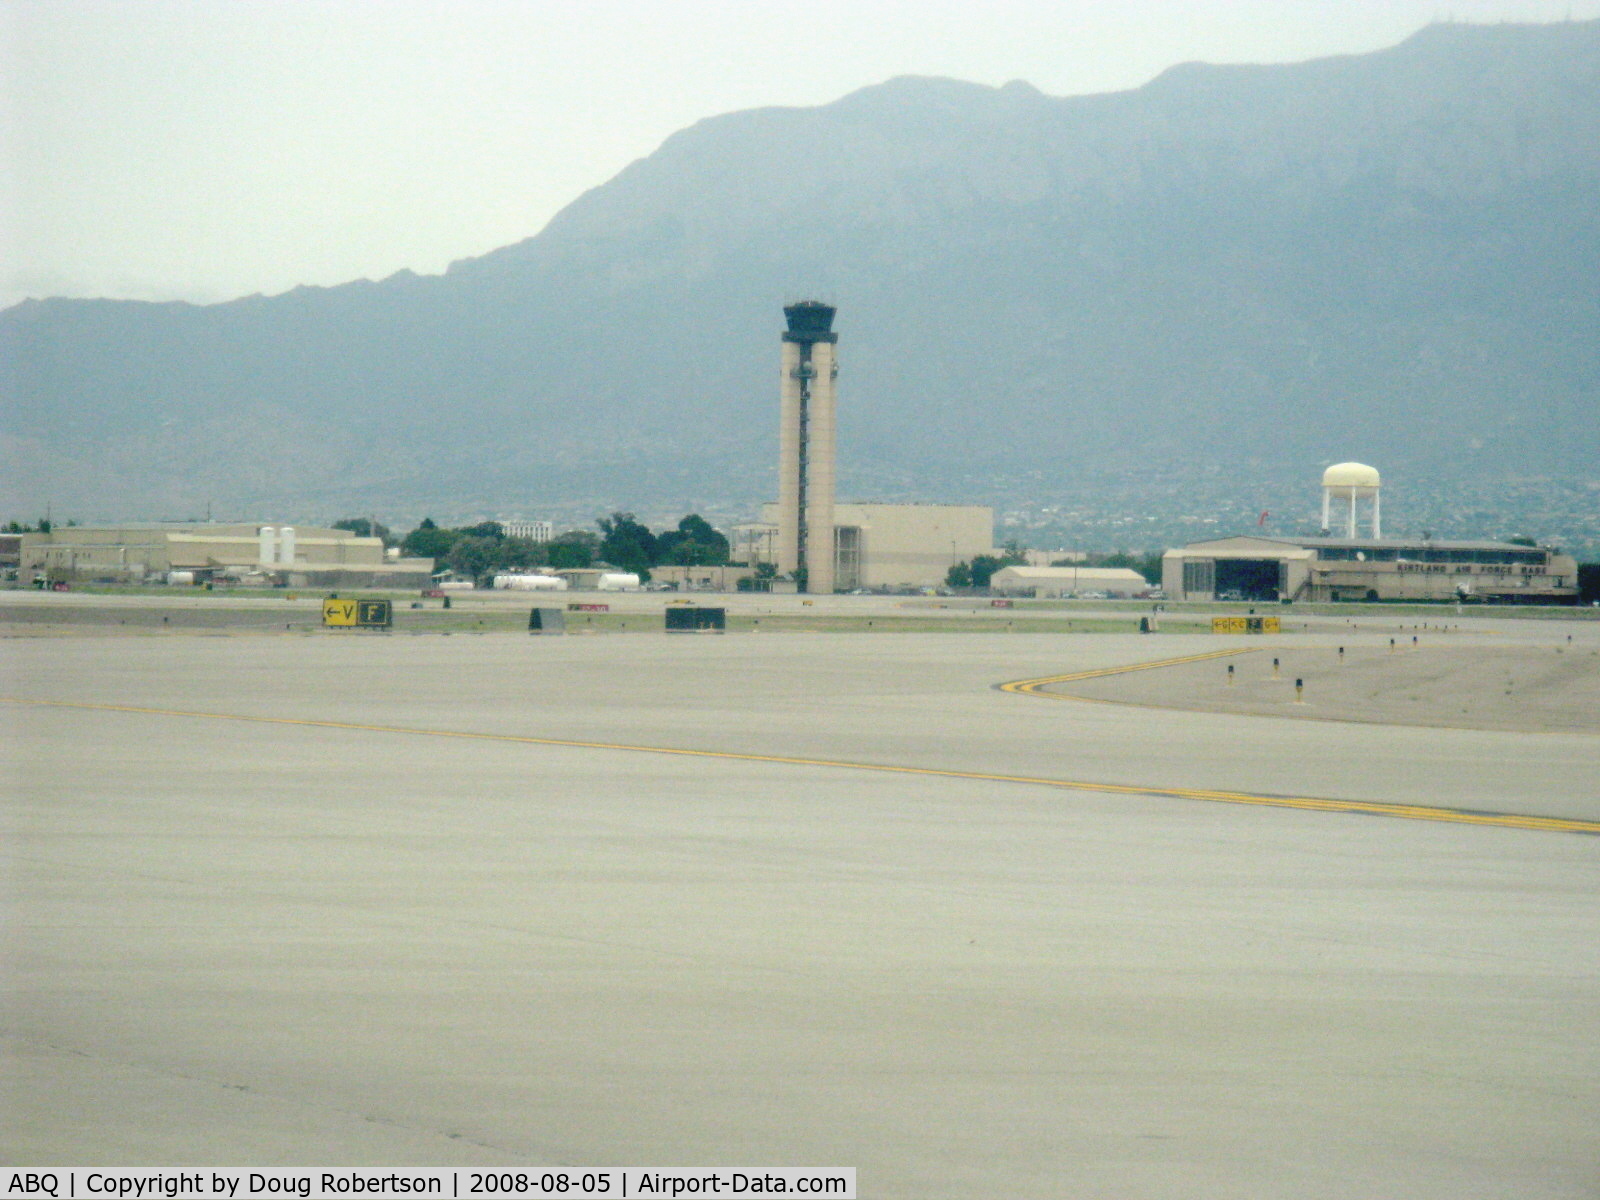 Albuquerque International Sunport Airport (ABQ) - Air Traffic Control Tower